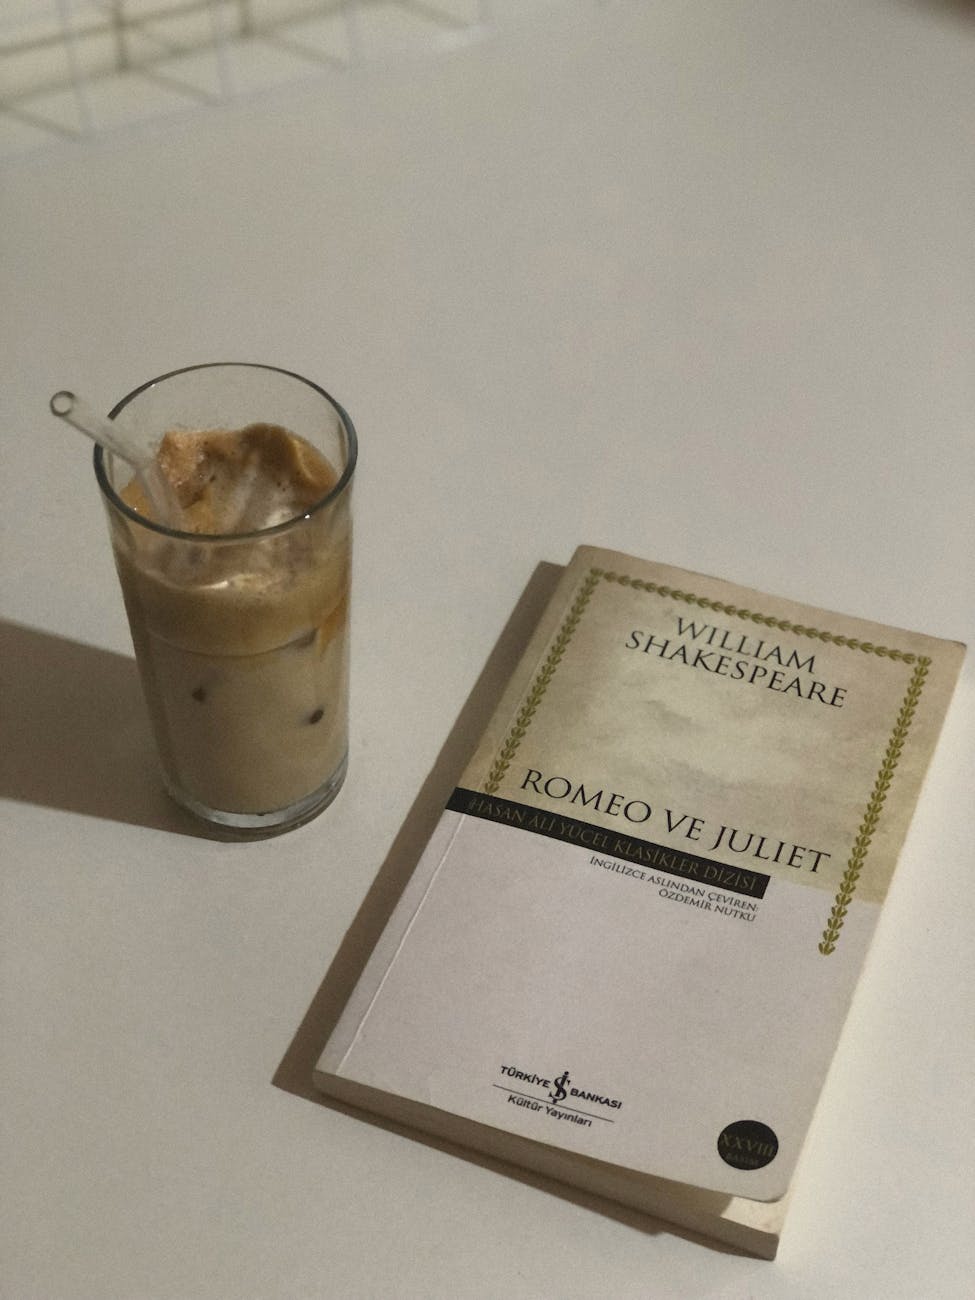 Un vaso de café helado junto a un libro